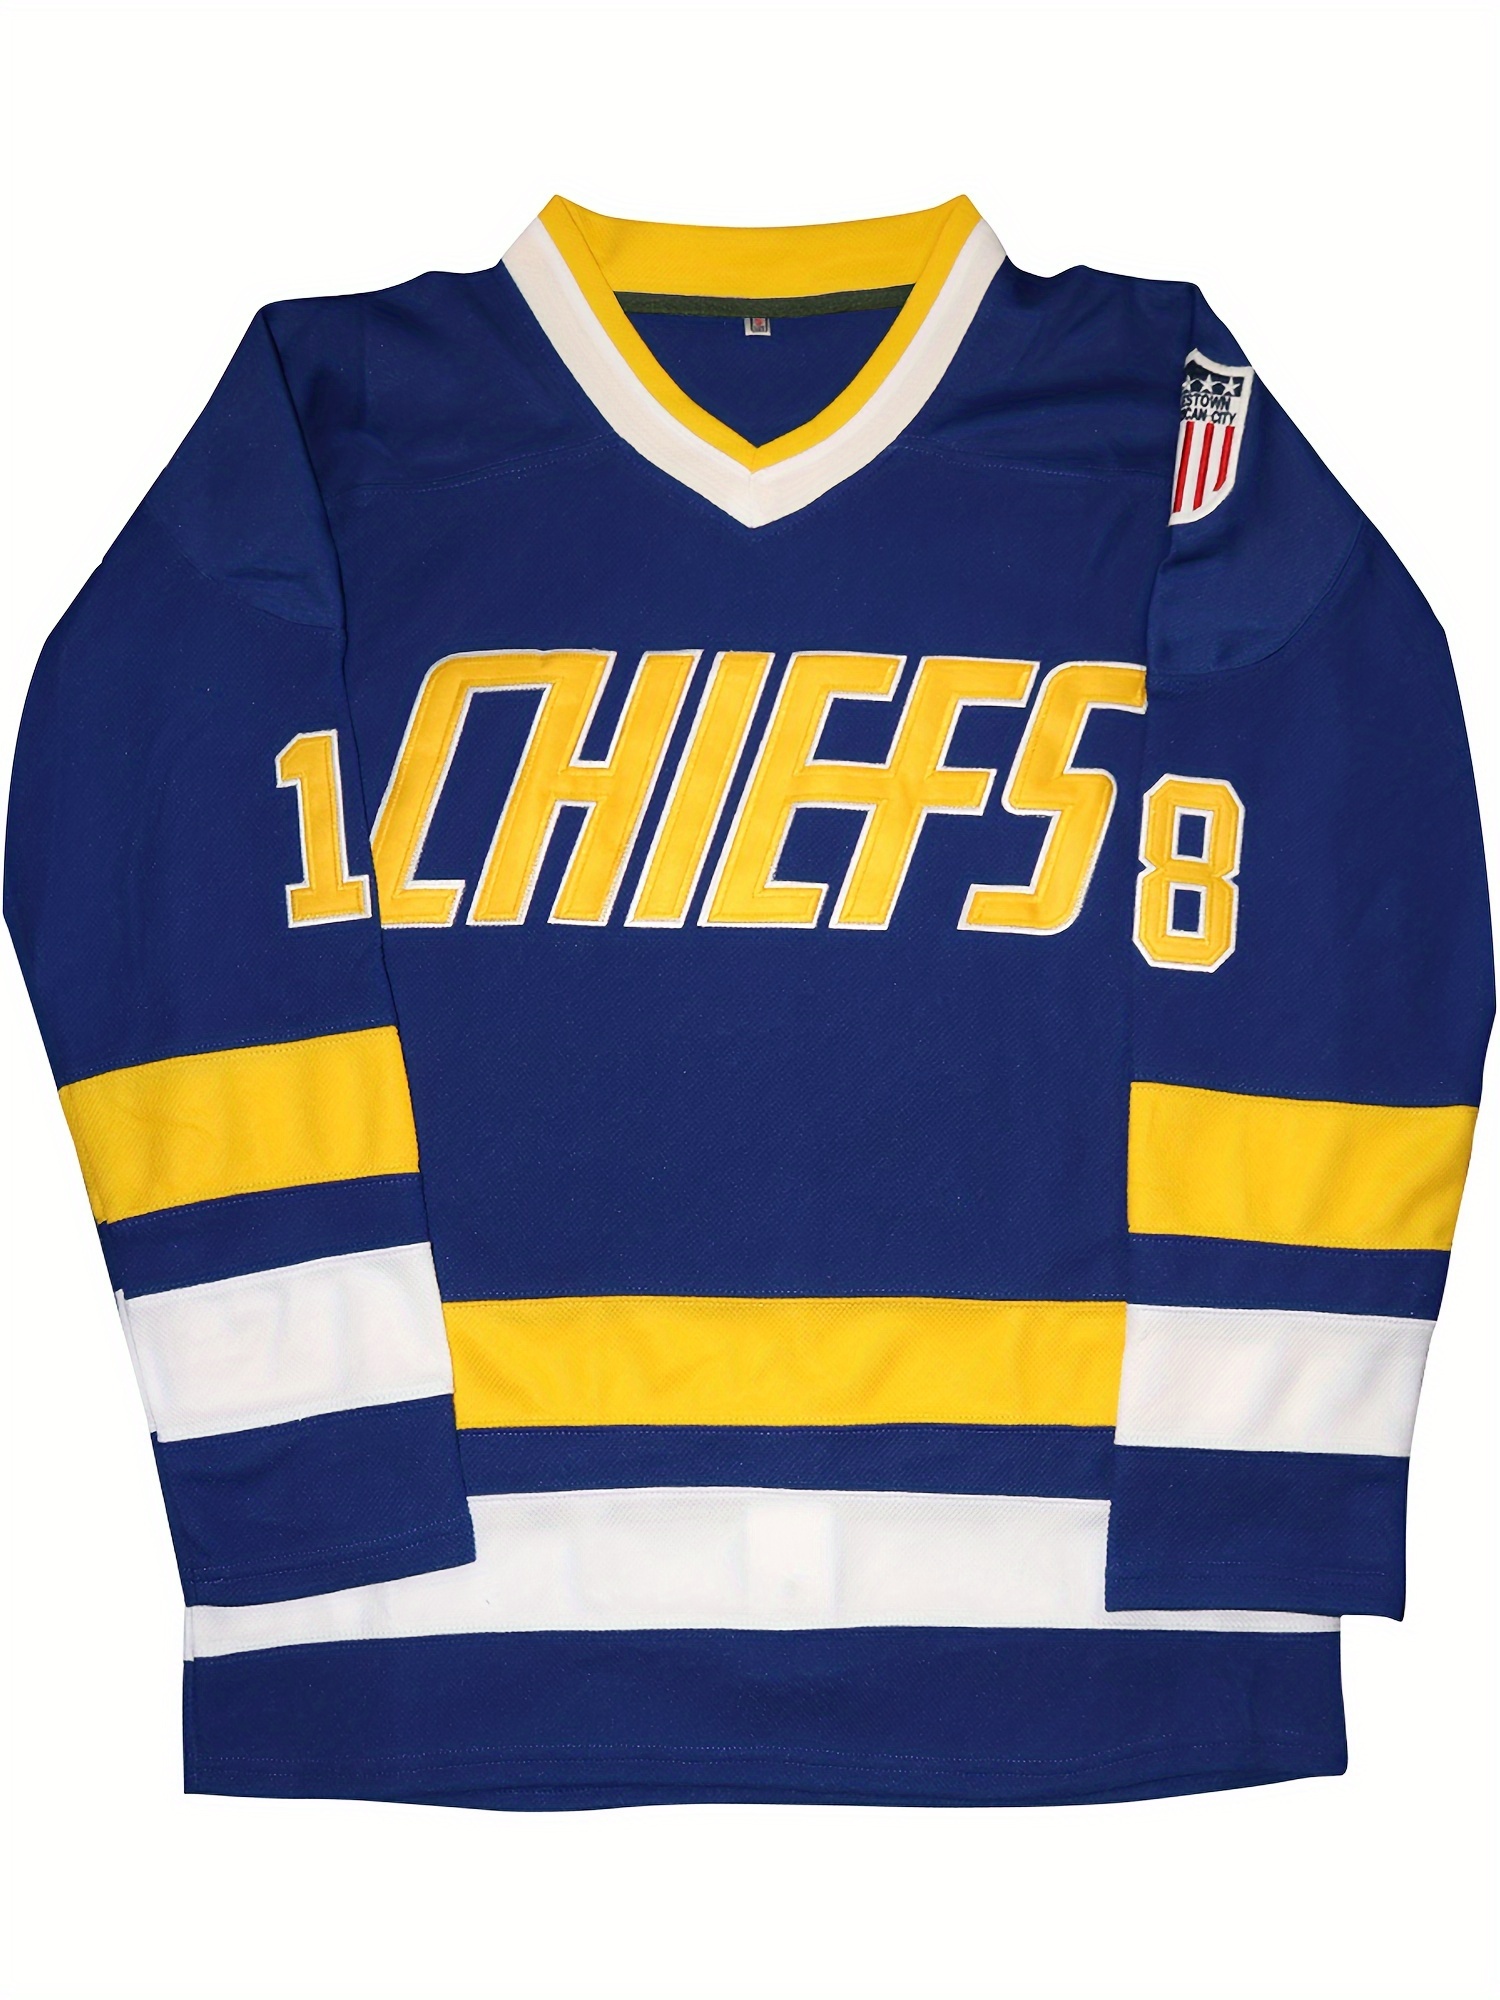 Nashville Predators Shirt Mens Large Blue Yellow Long Sleeve Hockey NHL  Rugby